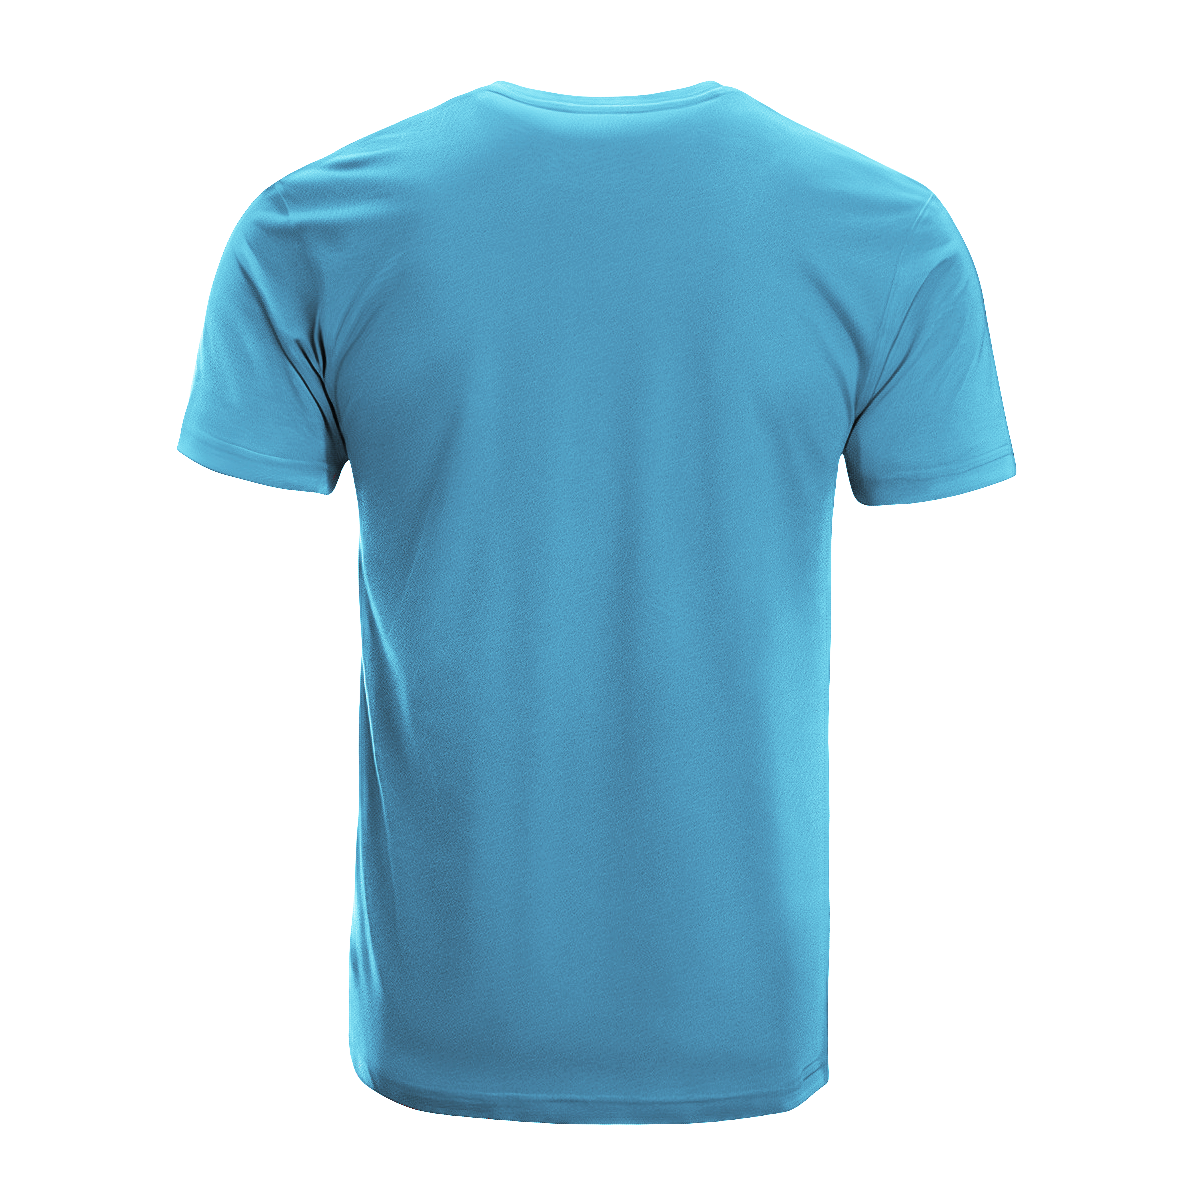 Kinnaird Tartan Crest T-shirt - I'm not yelling style